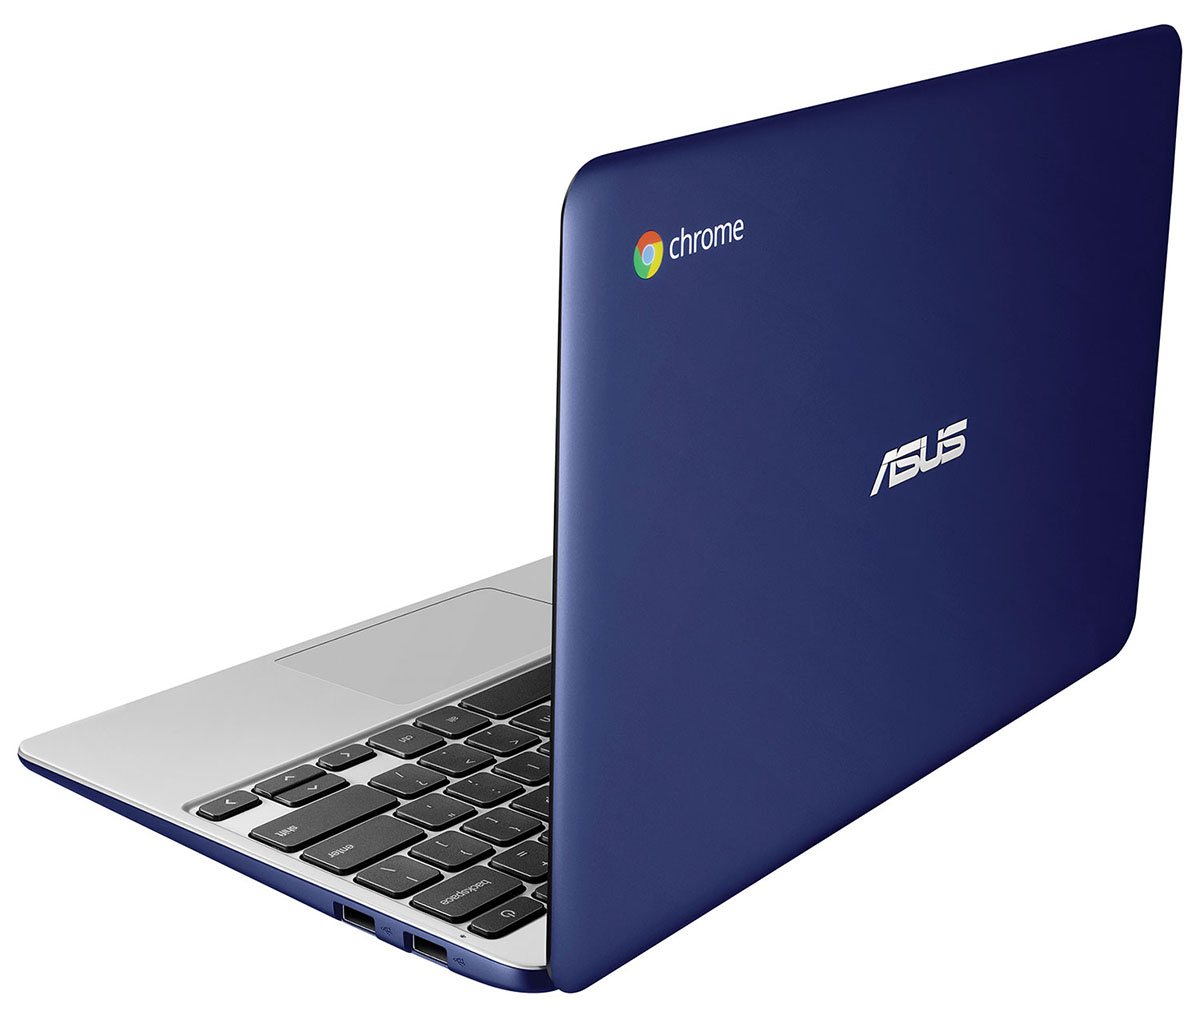 PC/タブレット ノートPC ASUS Chromebook C201 - Rockchip RK3288 · ARM Mali-T760 MP4 · 11.6 